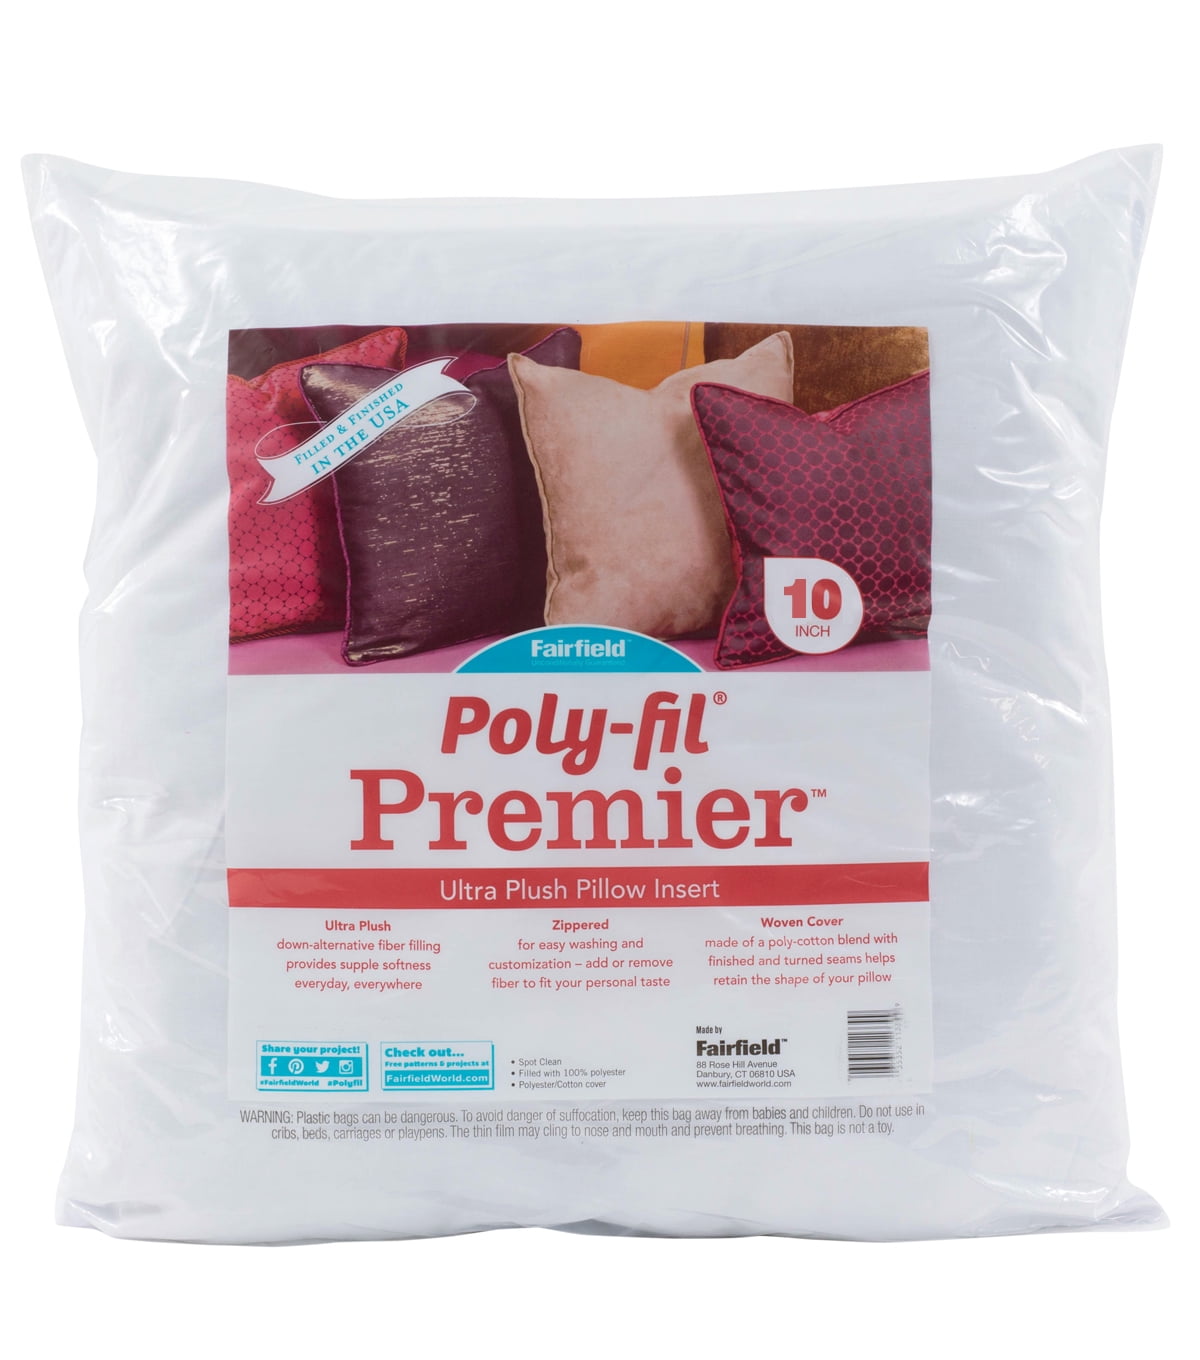 Jupean Polyester Fiber Fill, Stuffing for Small Dolls Part Pillow